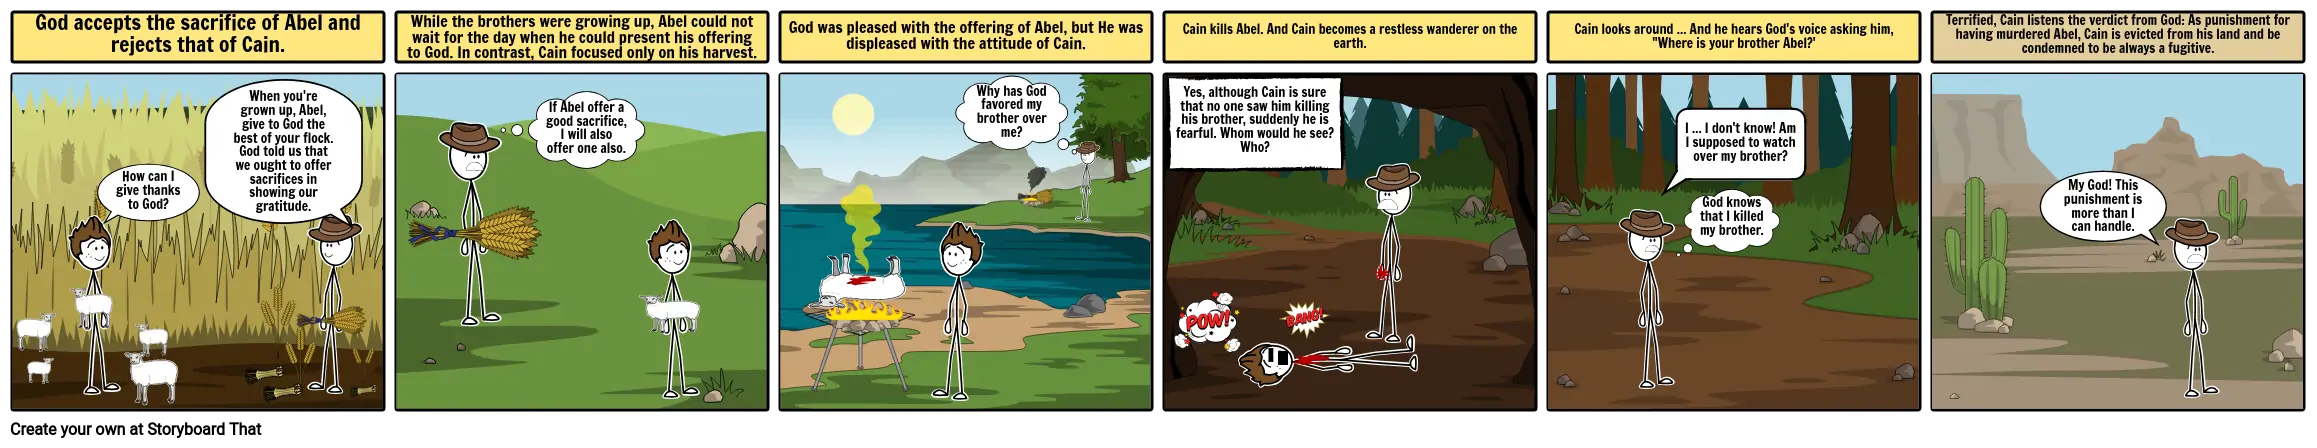 Genesis - Cain and Abel